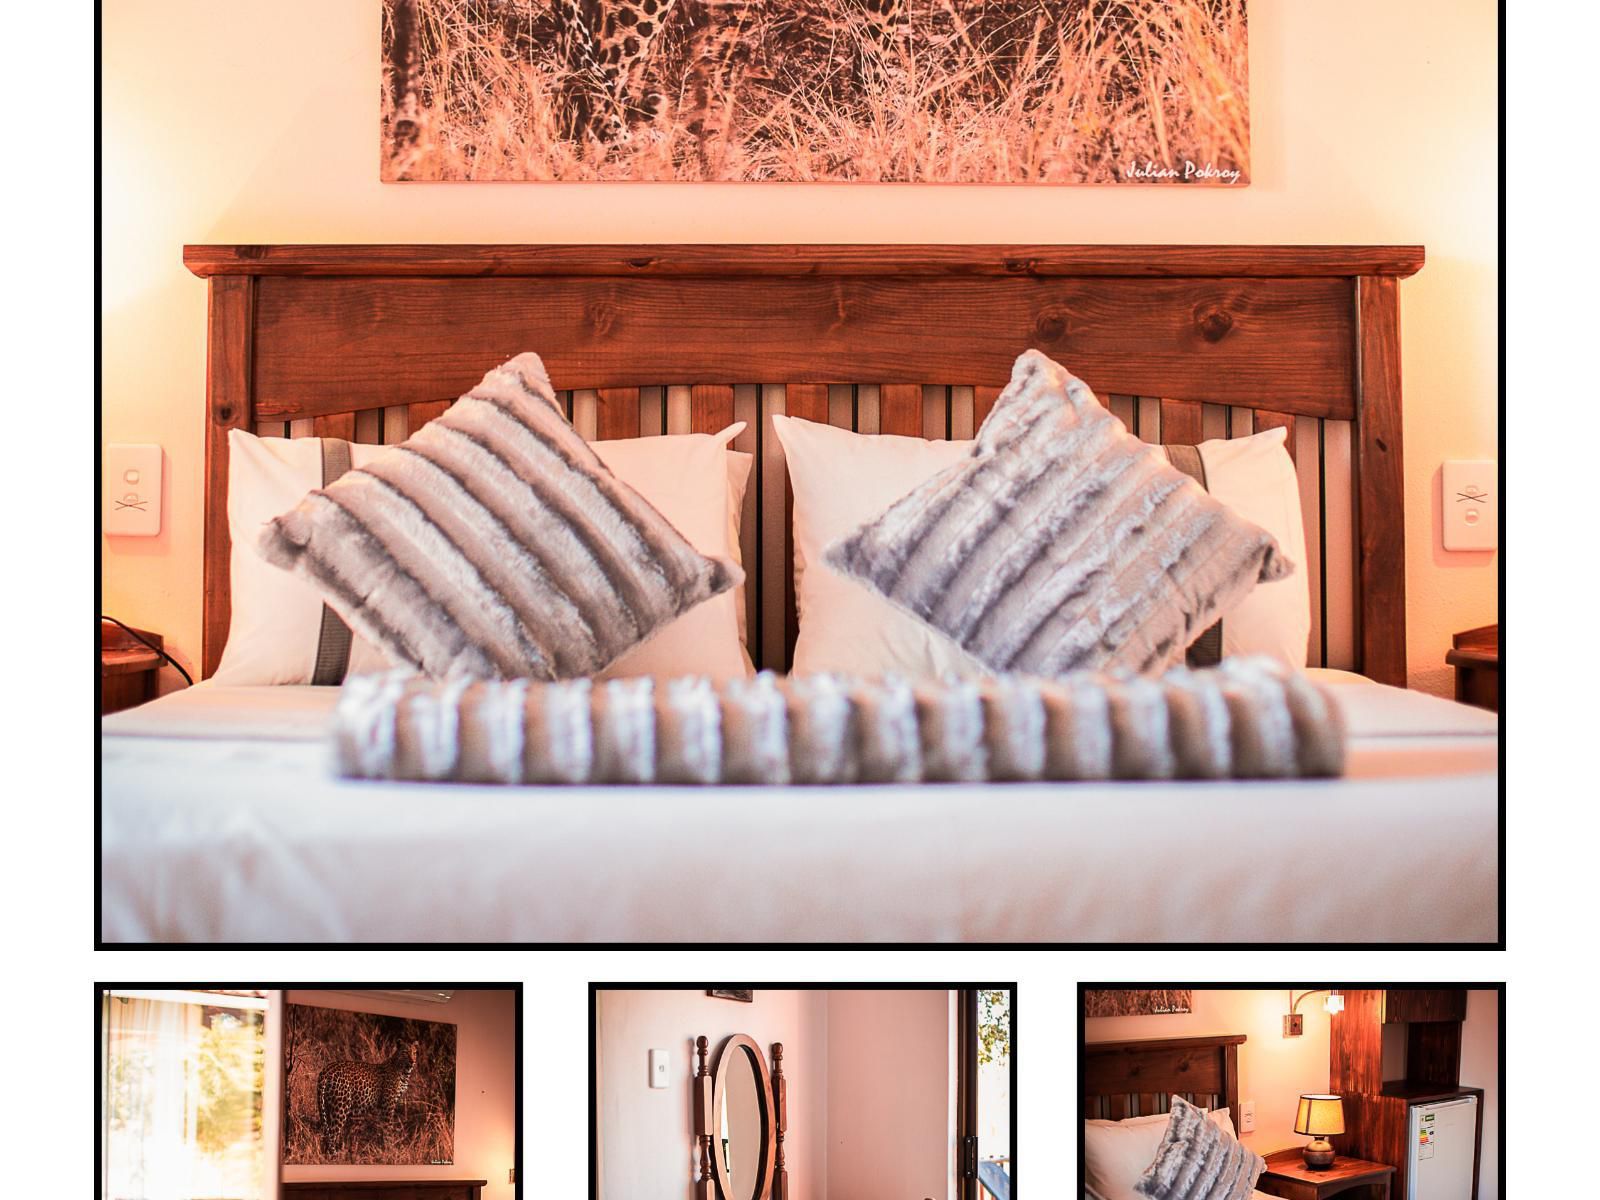 The Bushbabies Elite Lodge Hoedspruit Limpopo Province South Africa Bedroom